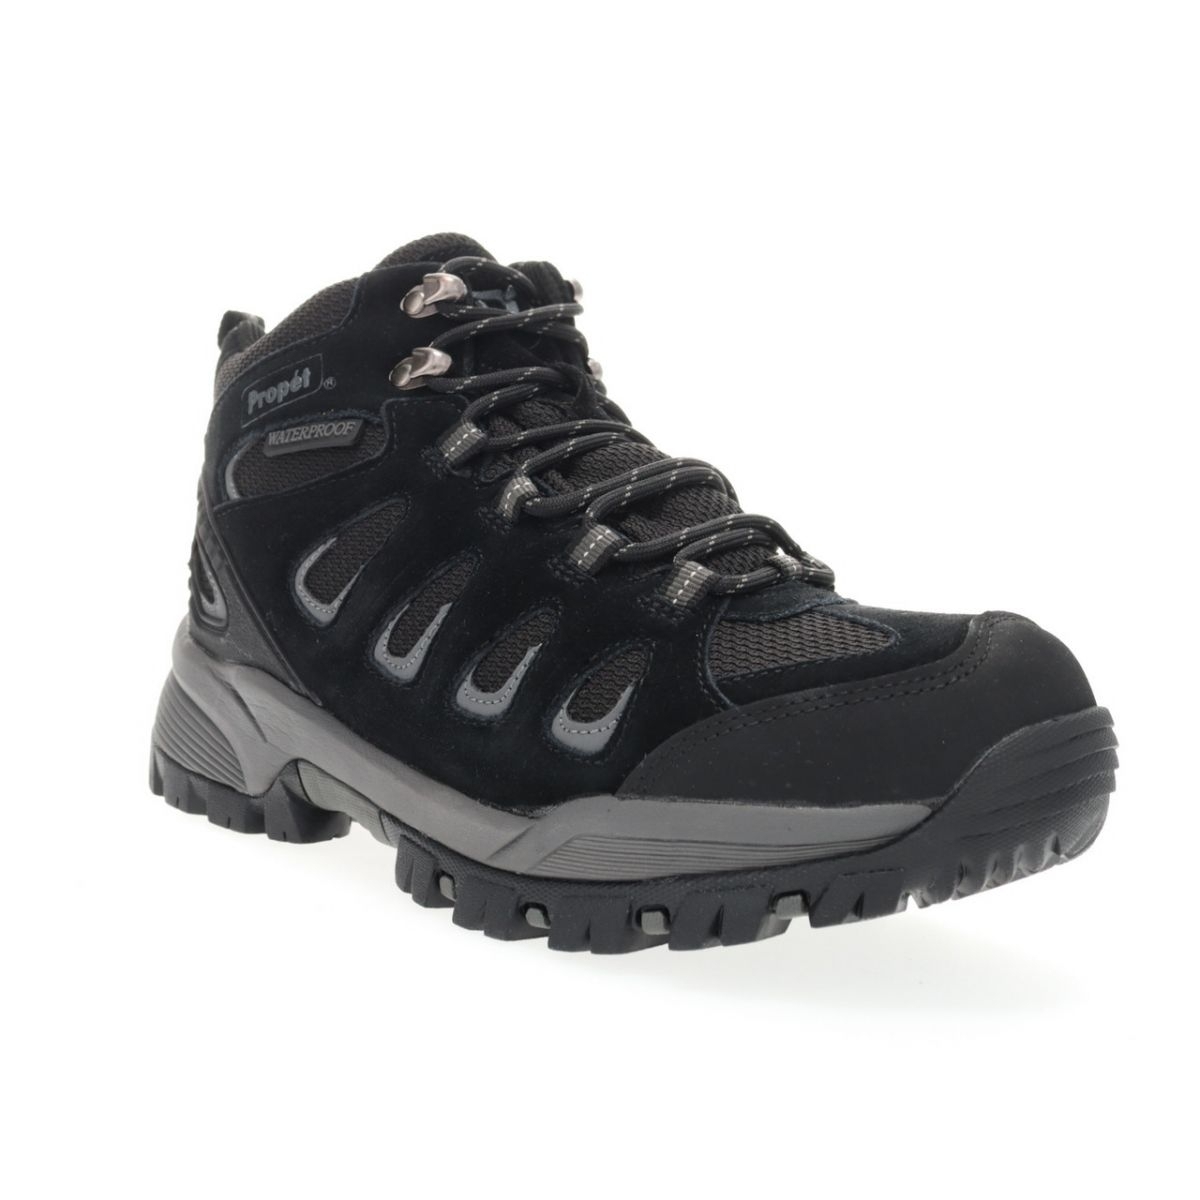 Propet Men's Ridge Walker Hiking Boot Black - M3599B 8 XX US Men BLACK - BLACK, 14 X-Wide